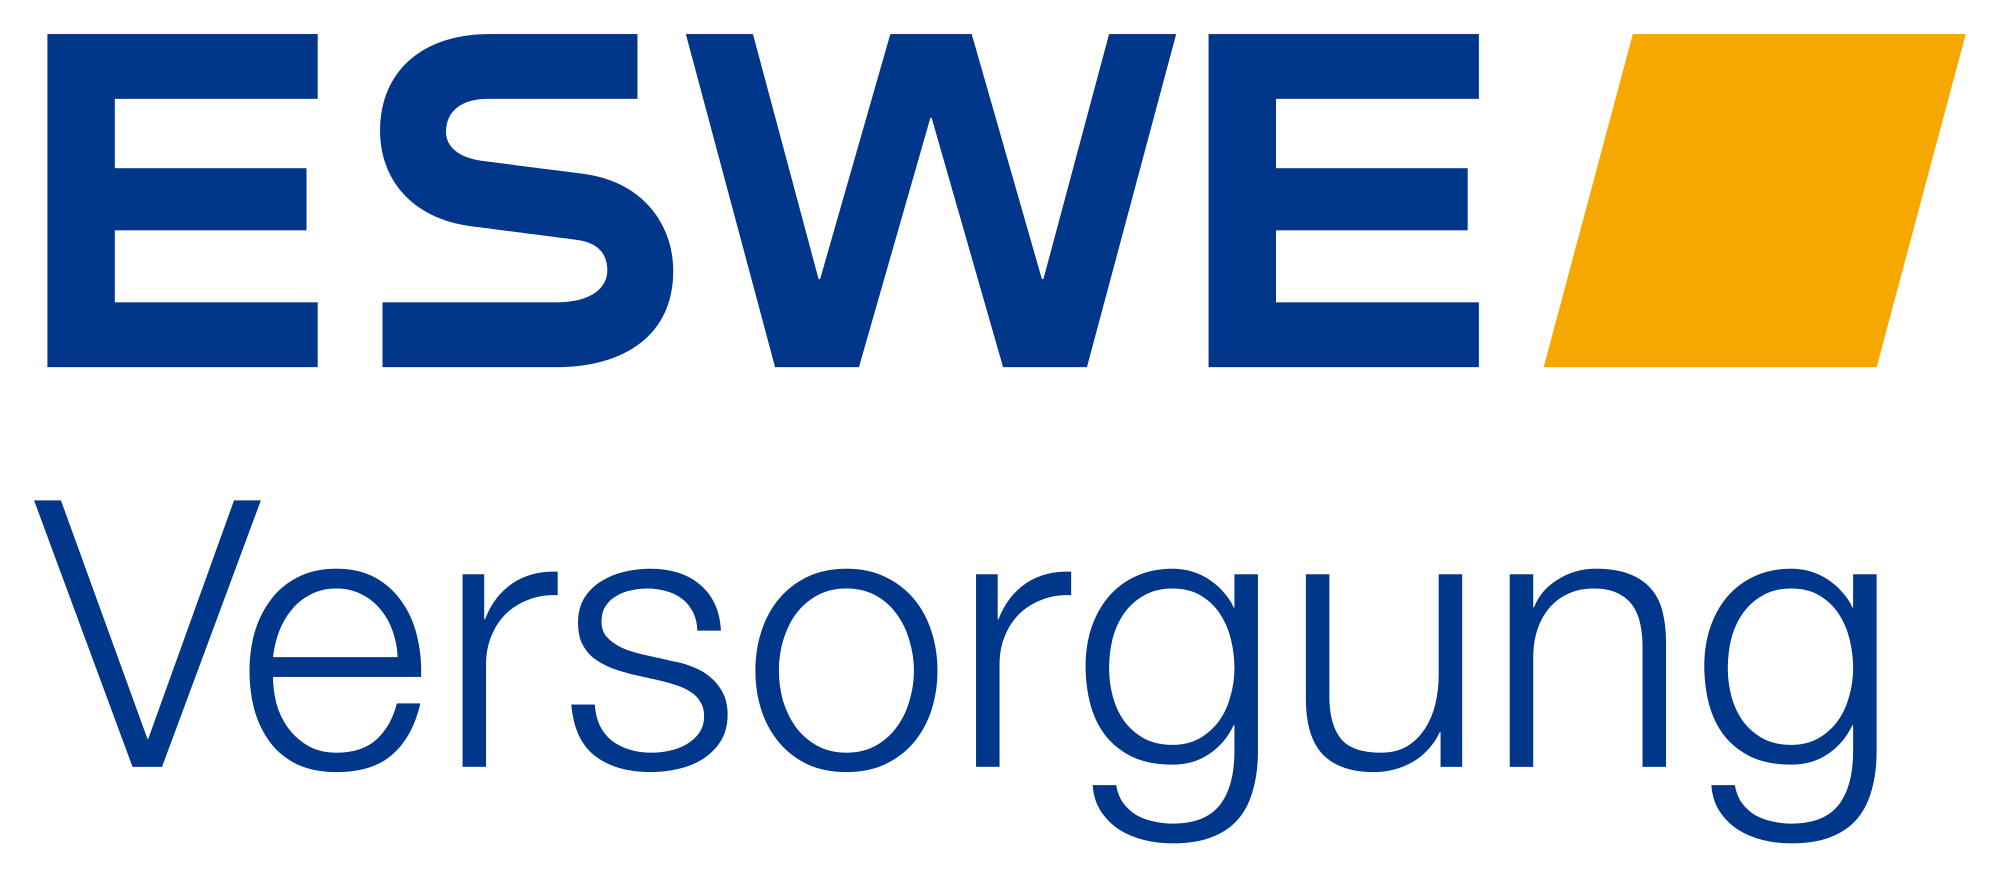 eswe-versorgung-logo_2015.svg_